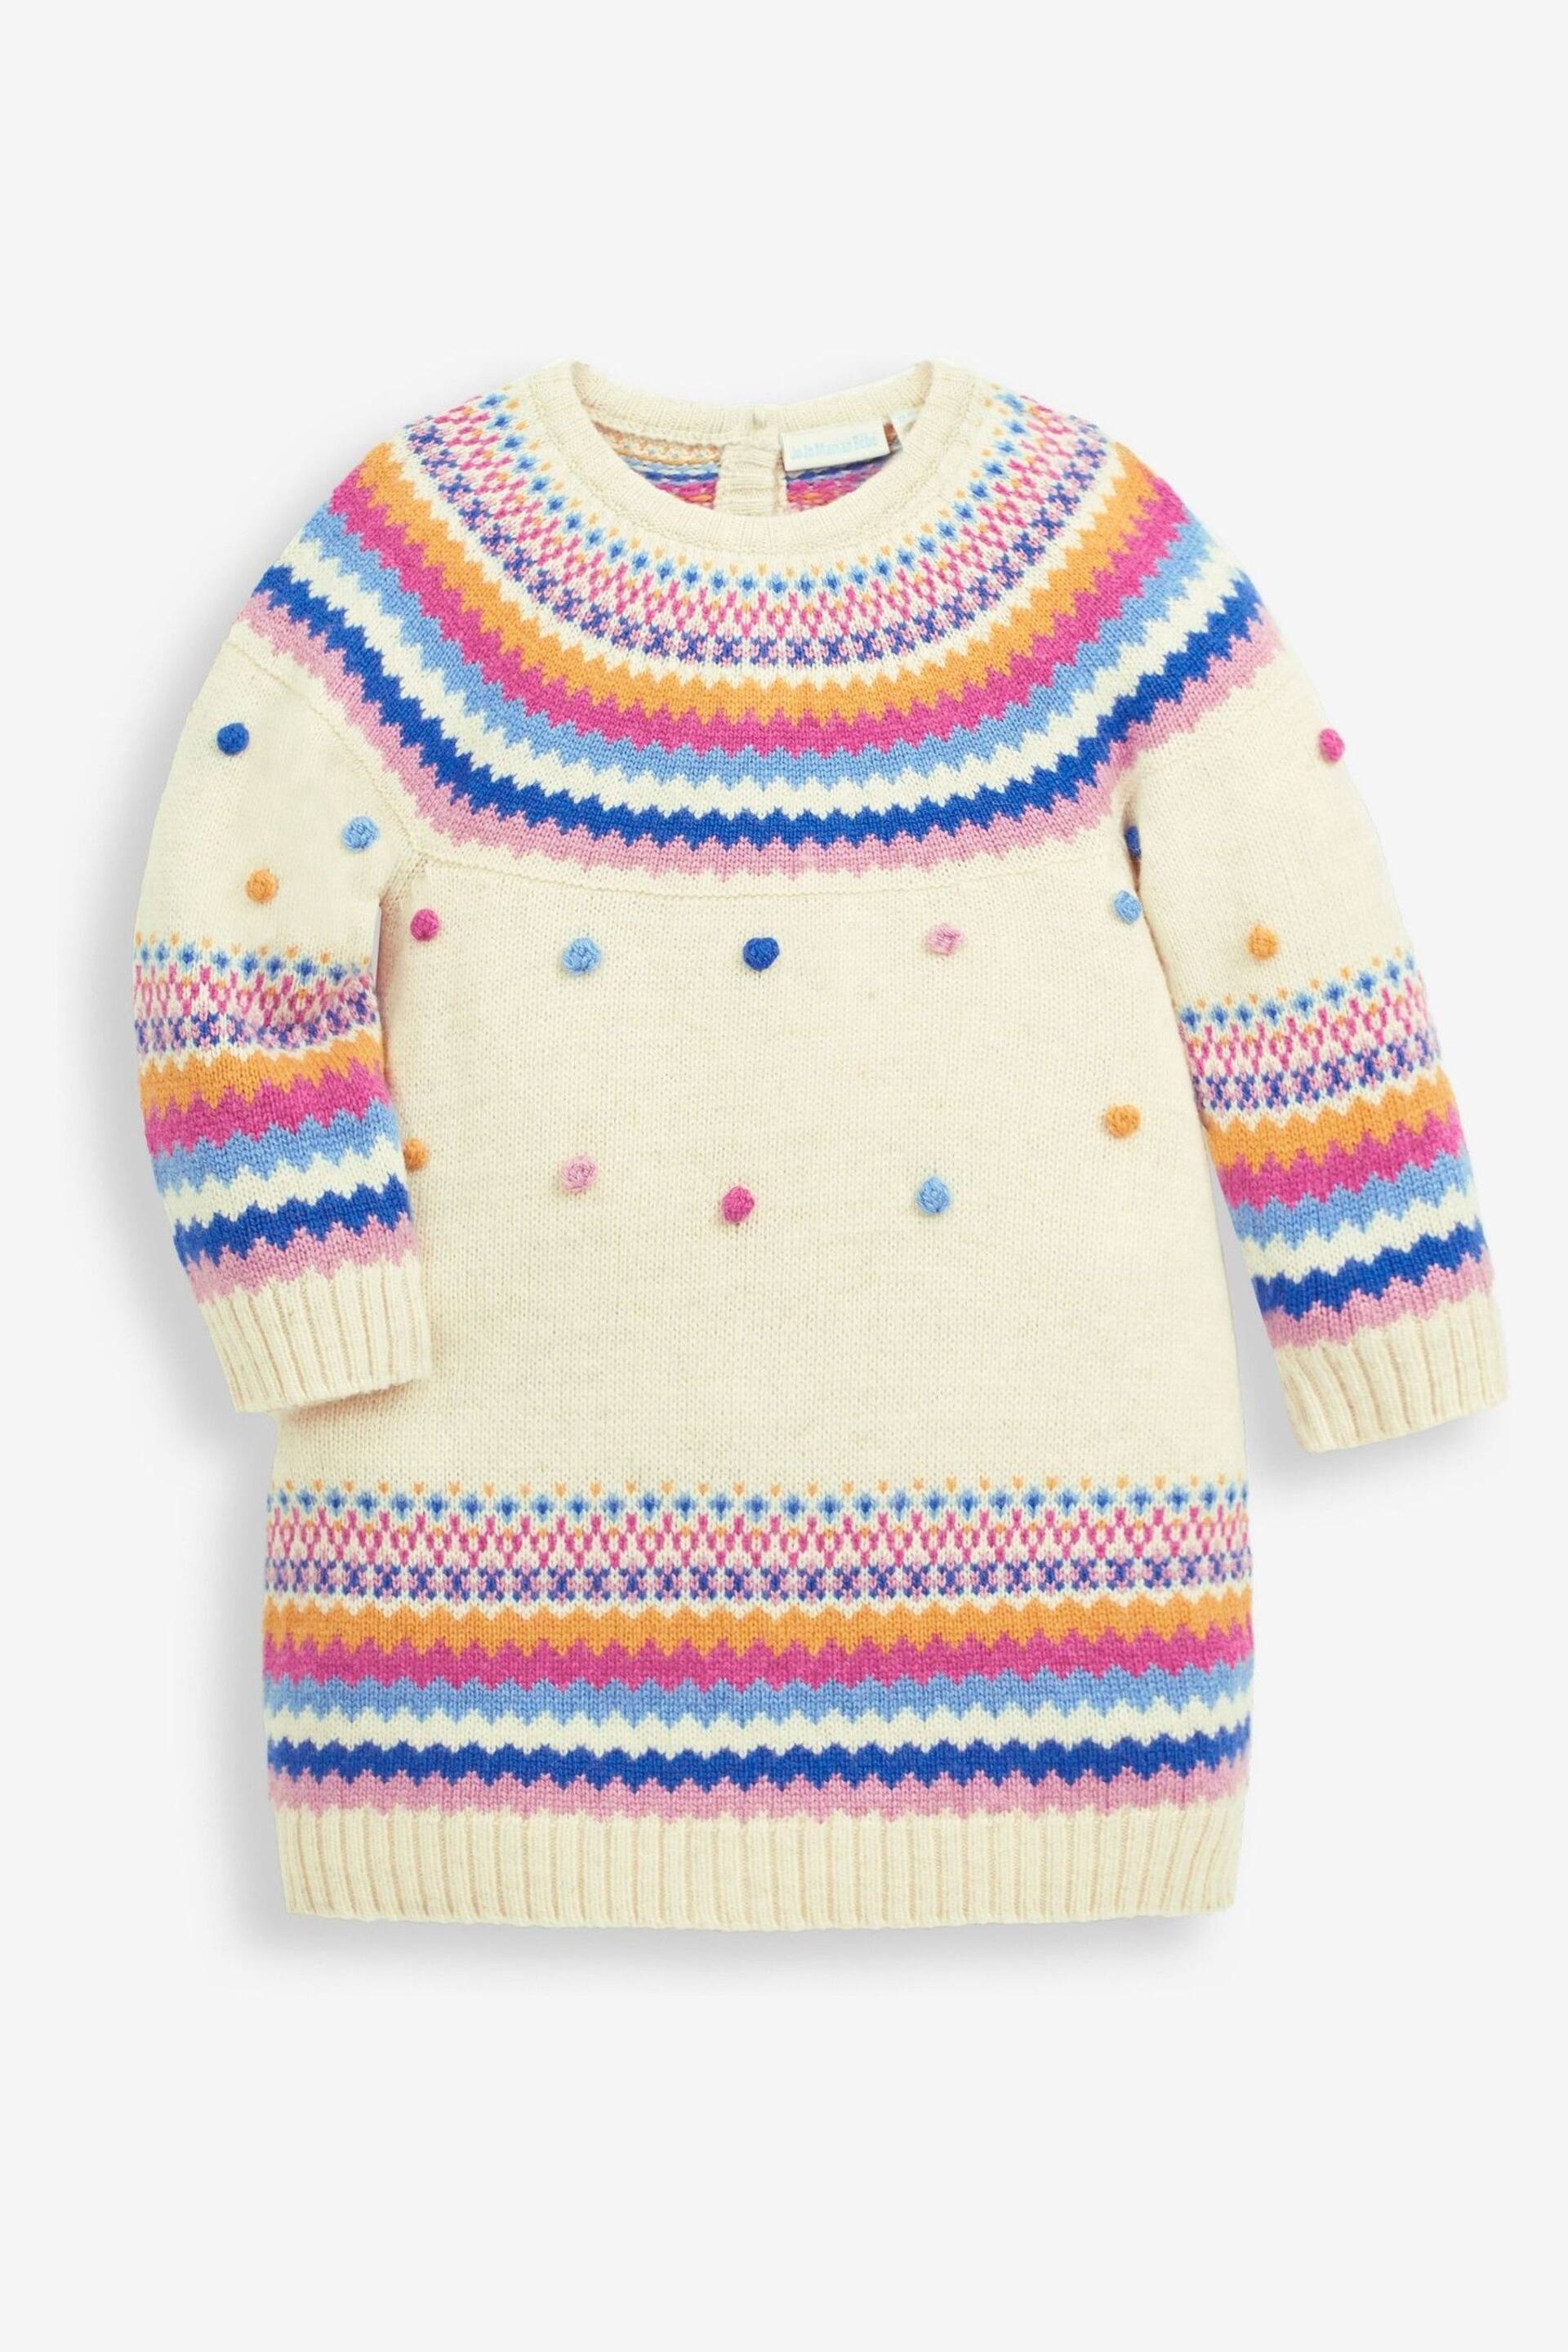 JoJo Maman Bébé Cream Bright Stripe Knitted Jumper Dress - Image 2 of 3